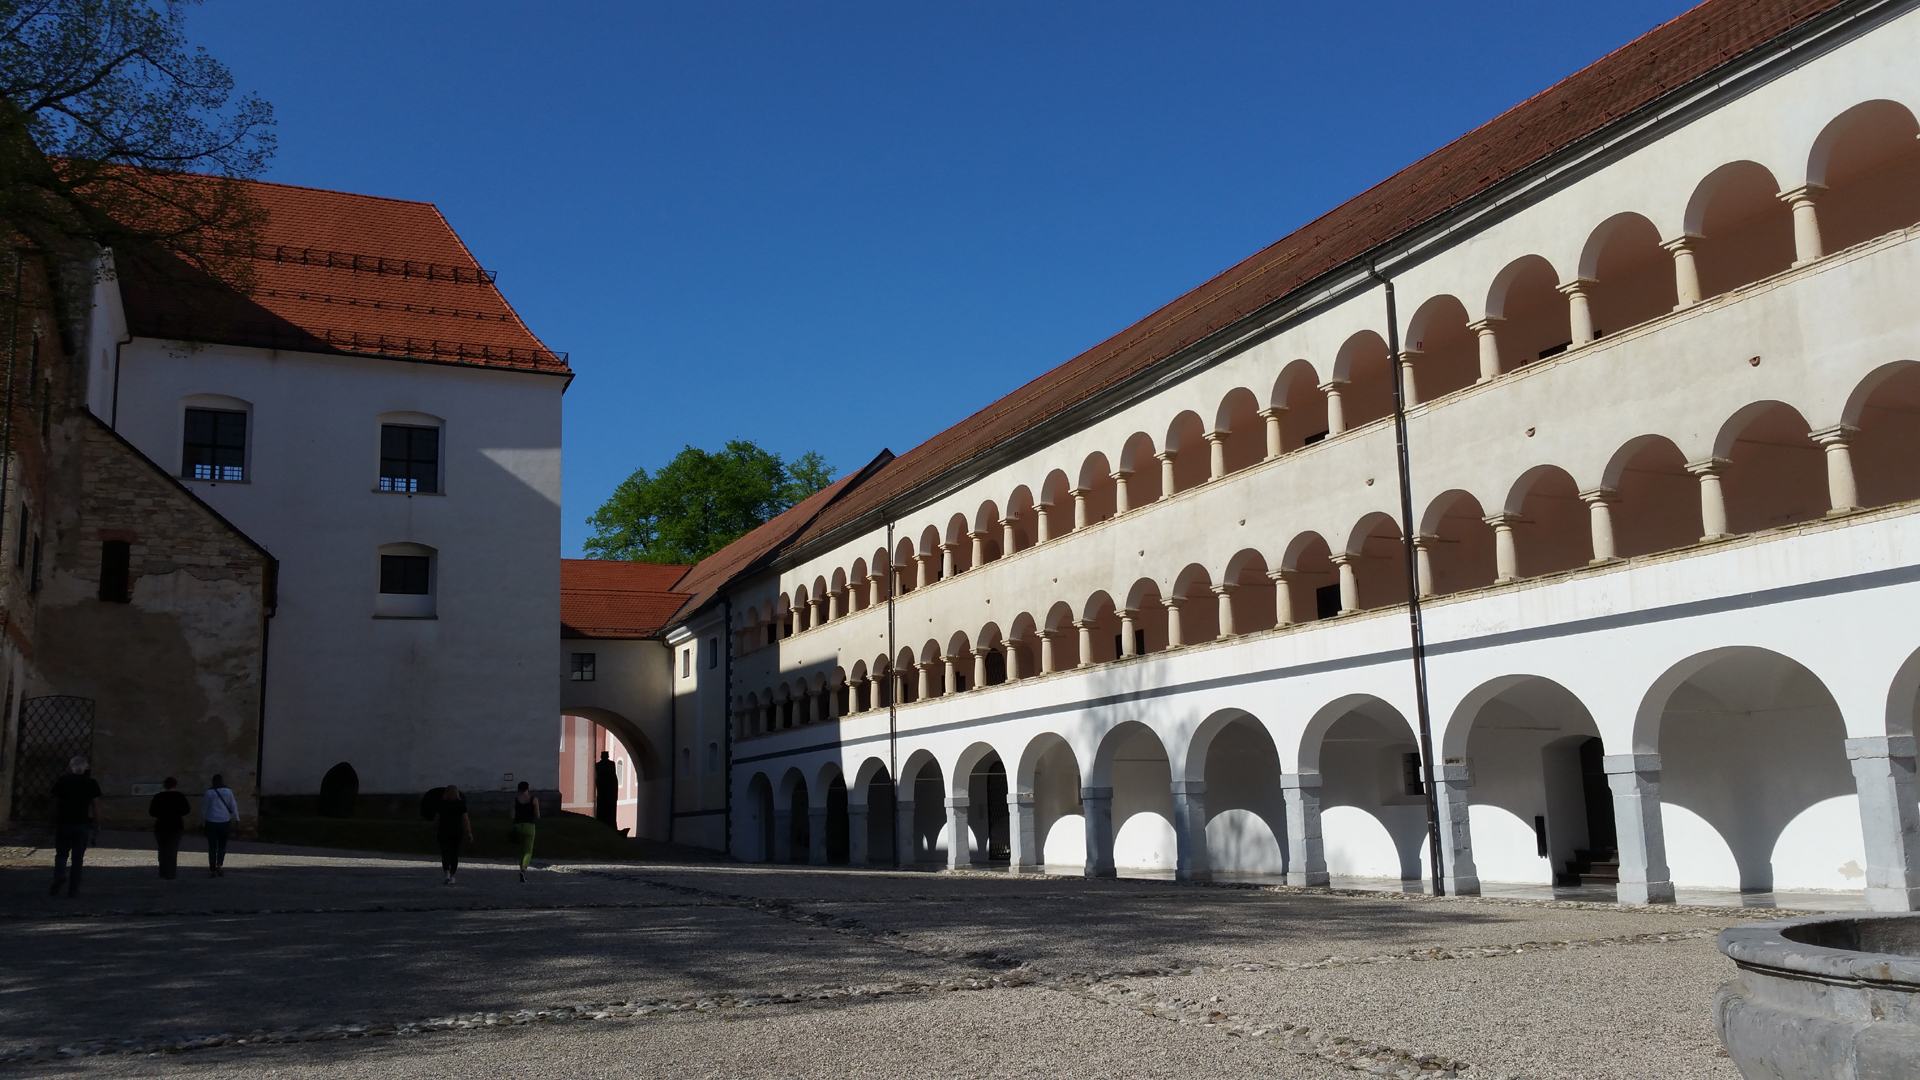 Slowenien 20: Kloster Kostanjevica